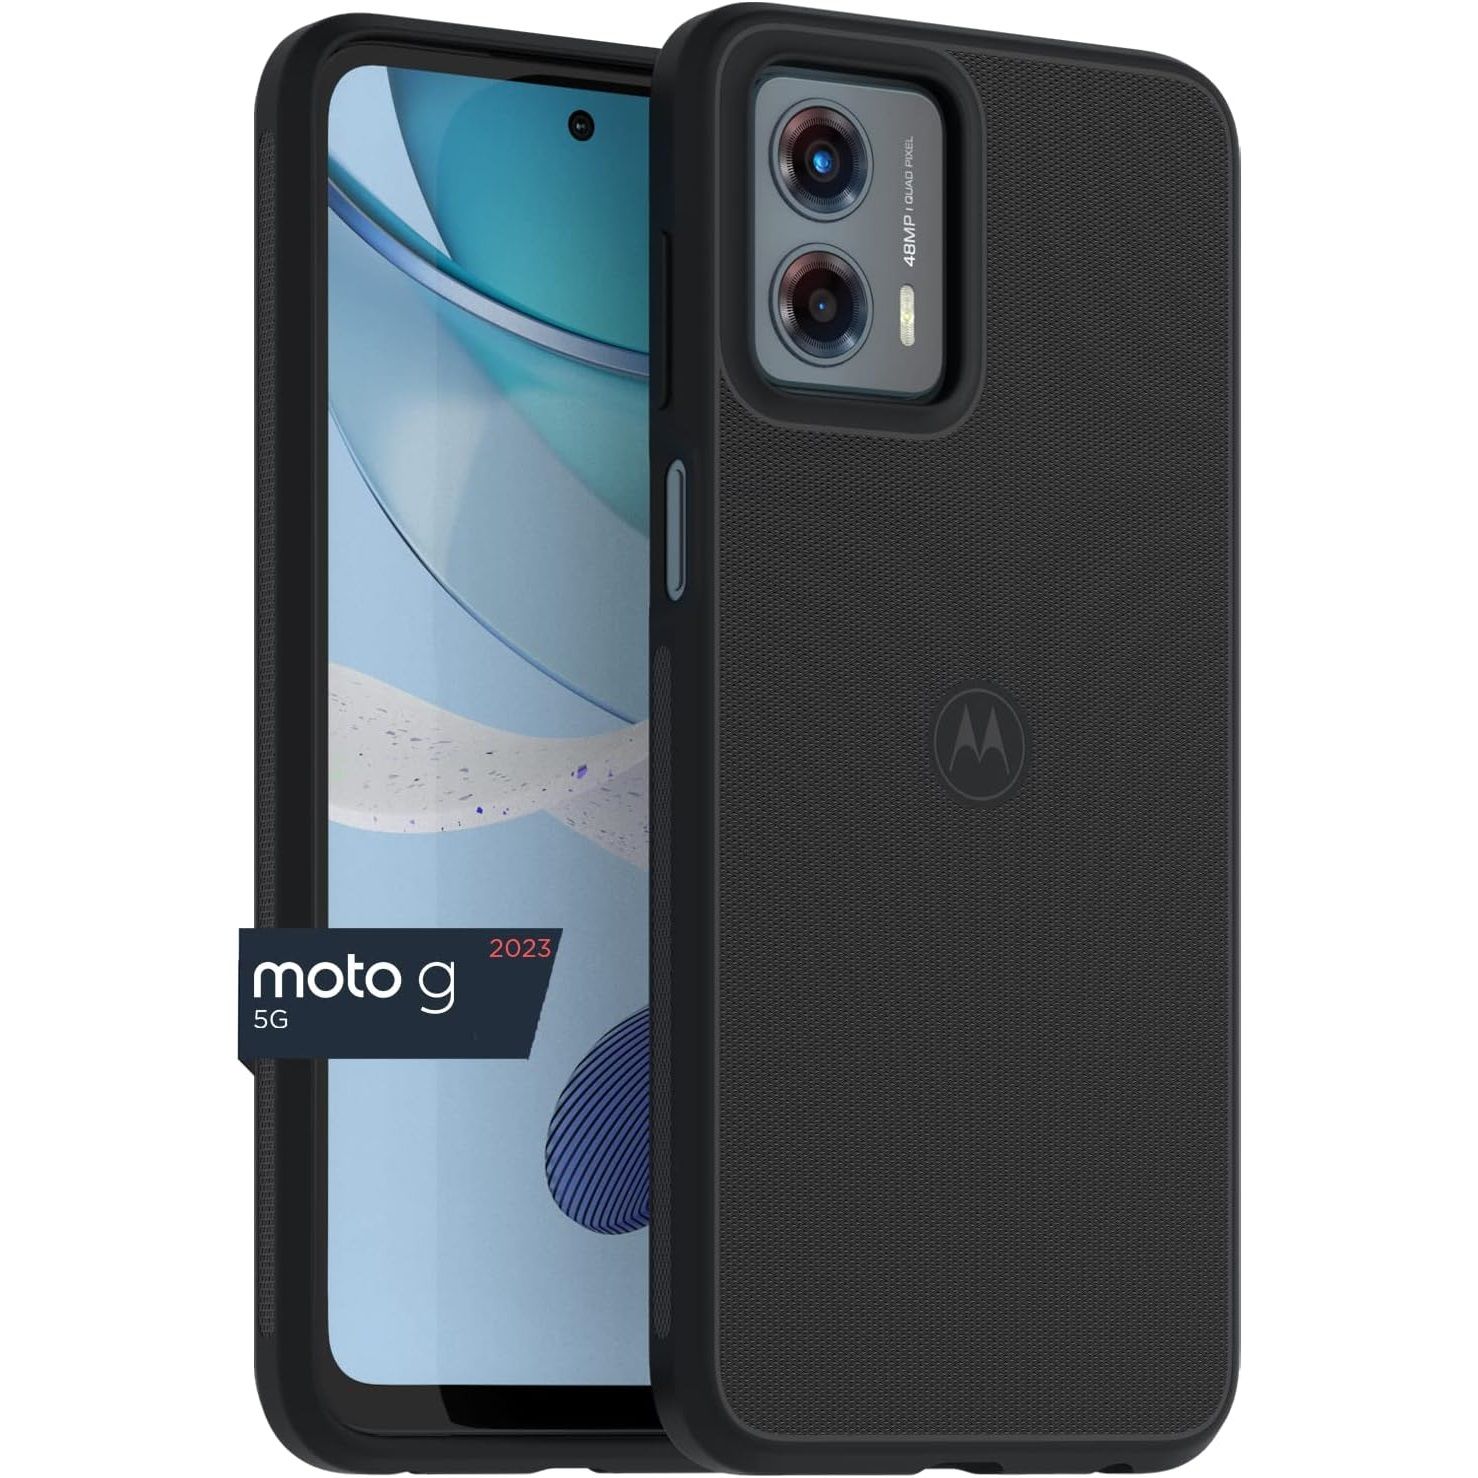 Capa Motorola Moto G 5G (2023) mostrada na parte frontal e traseira do telefone